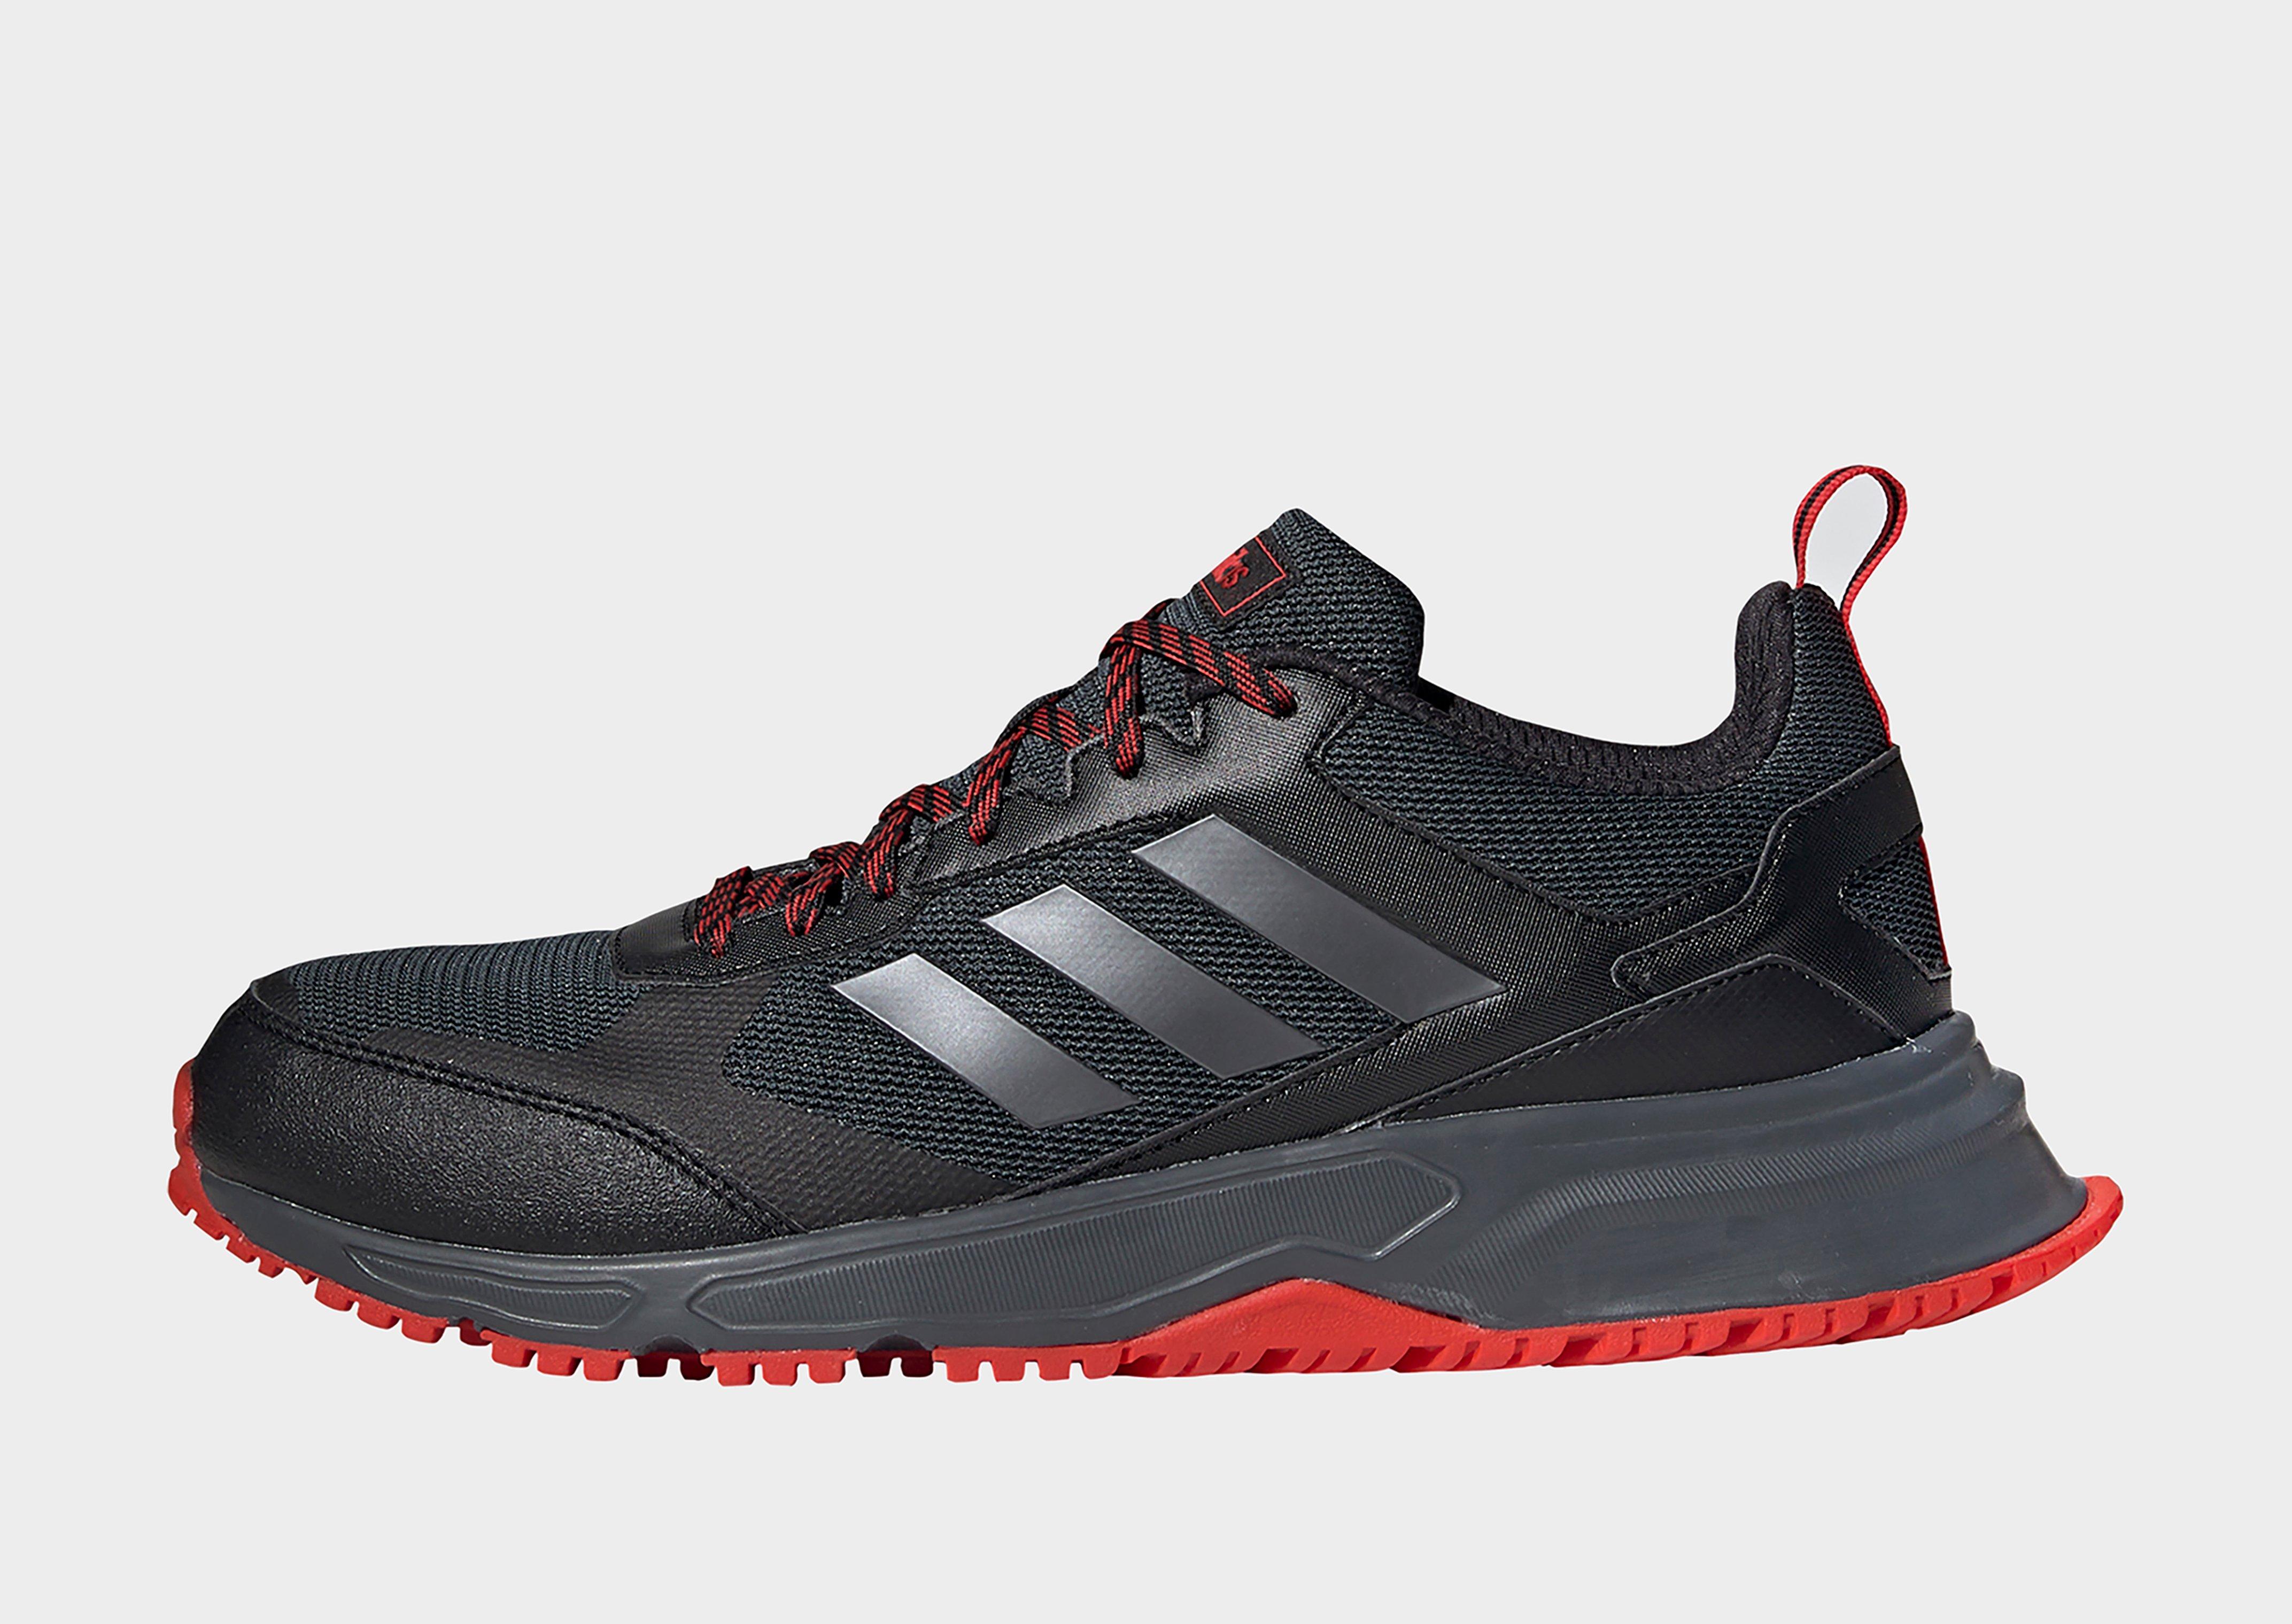 adidas rockadia trail men's running shoes